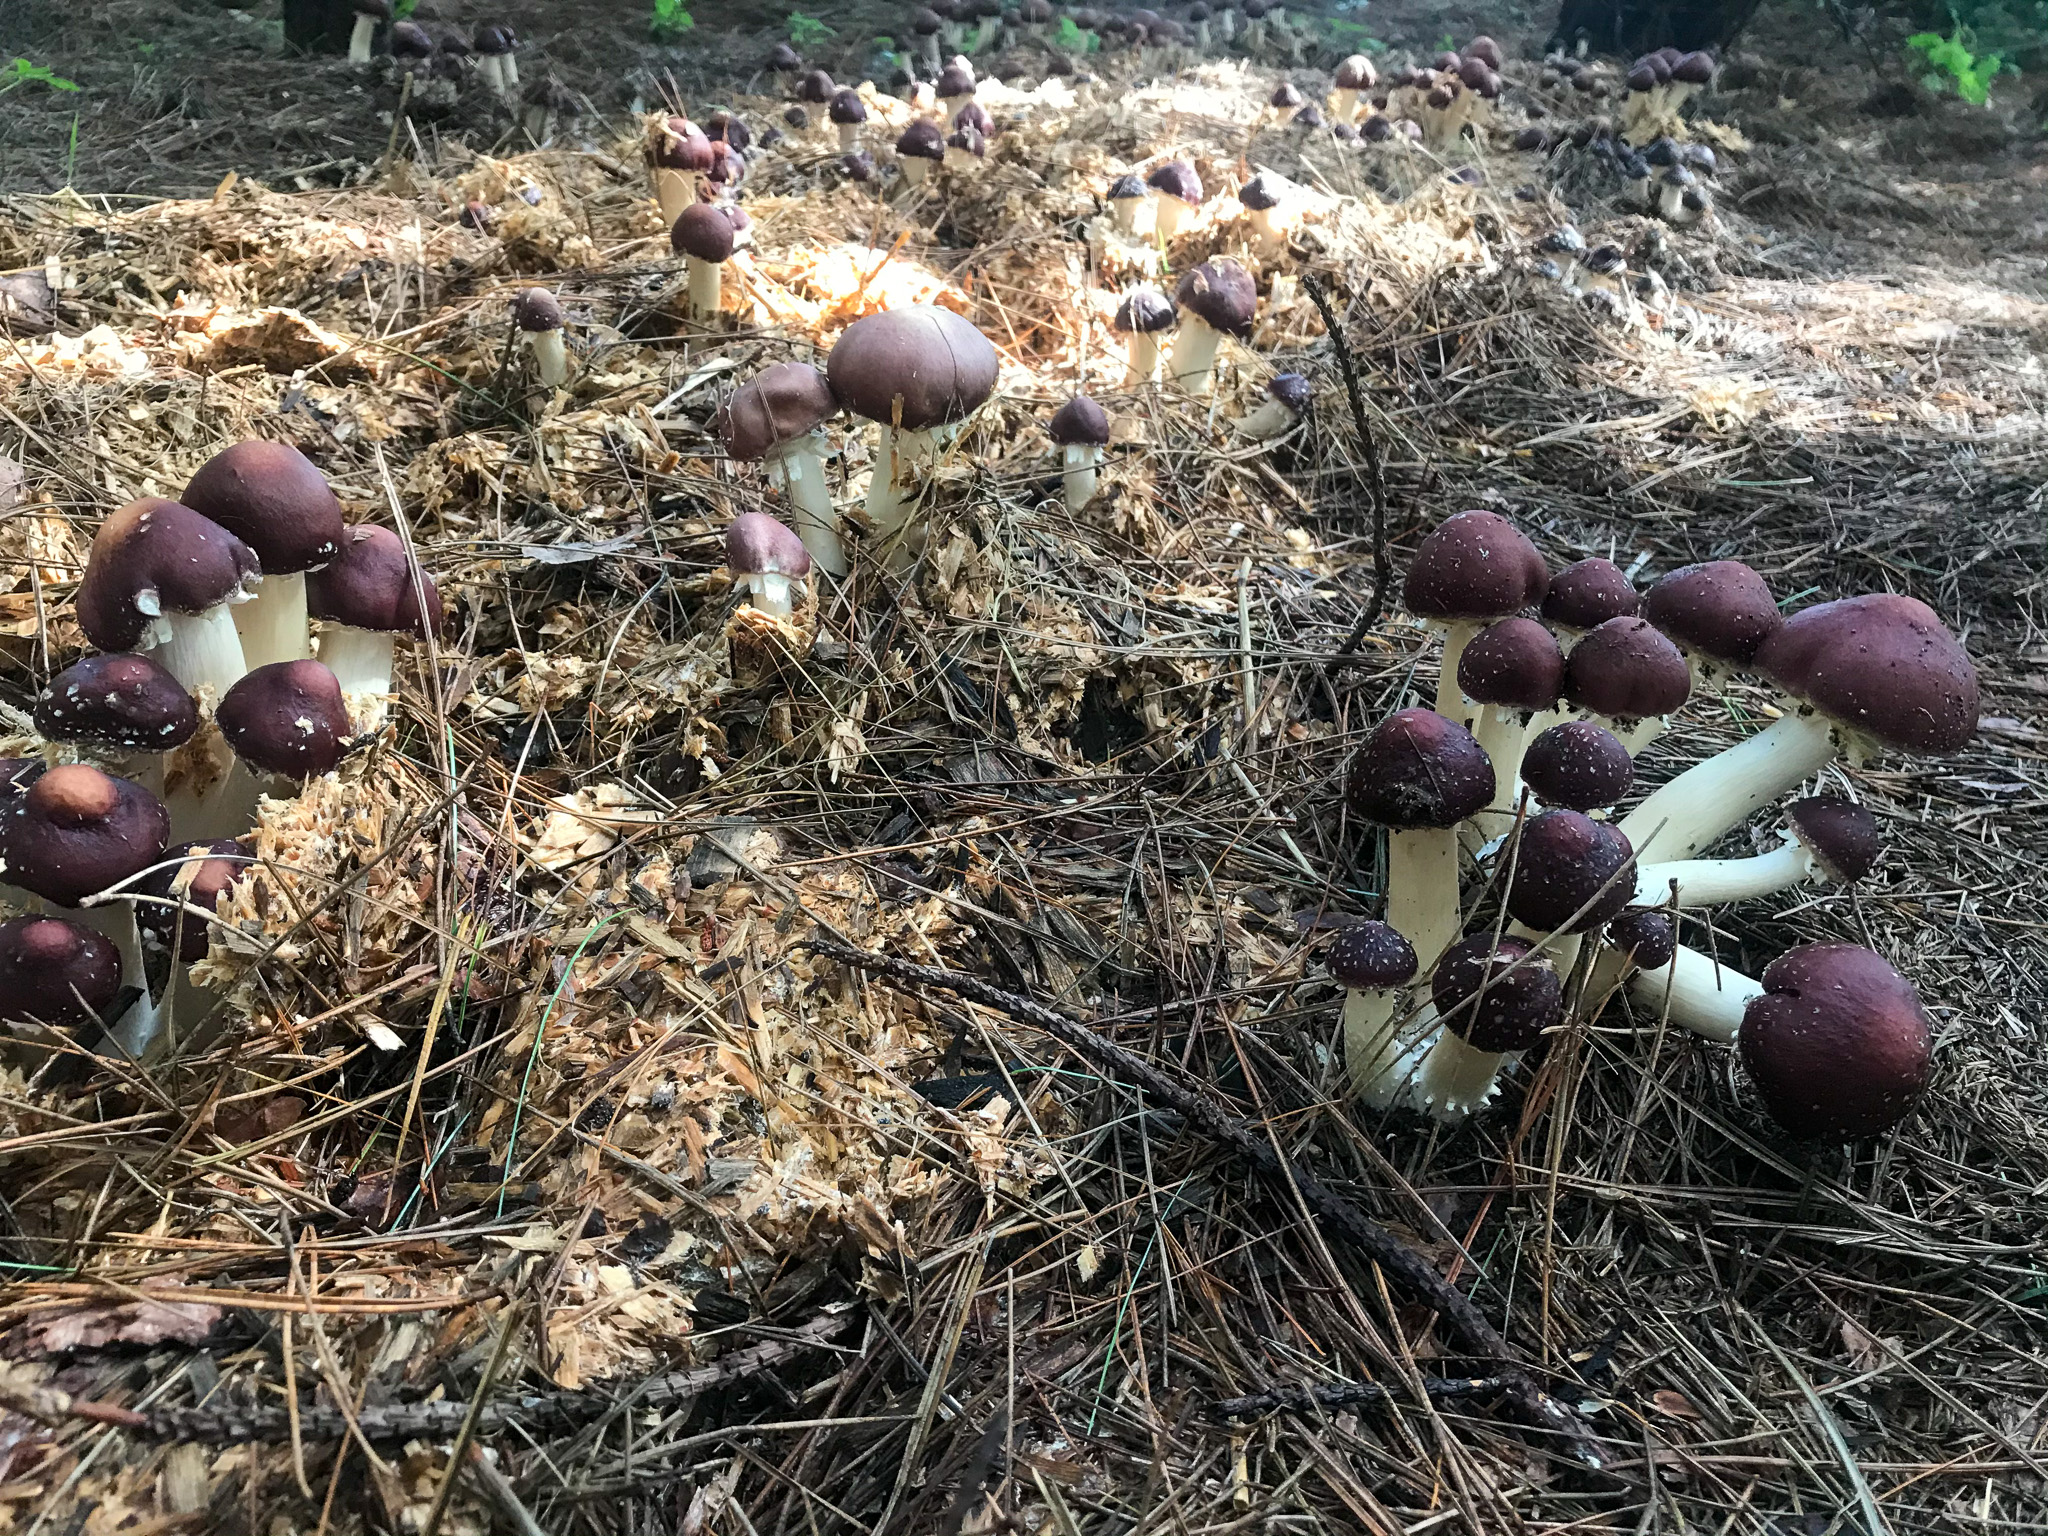 Wine cap mushrooms in the forest.